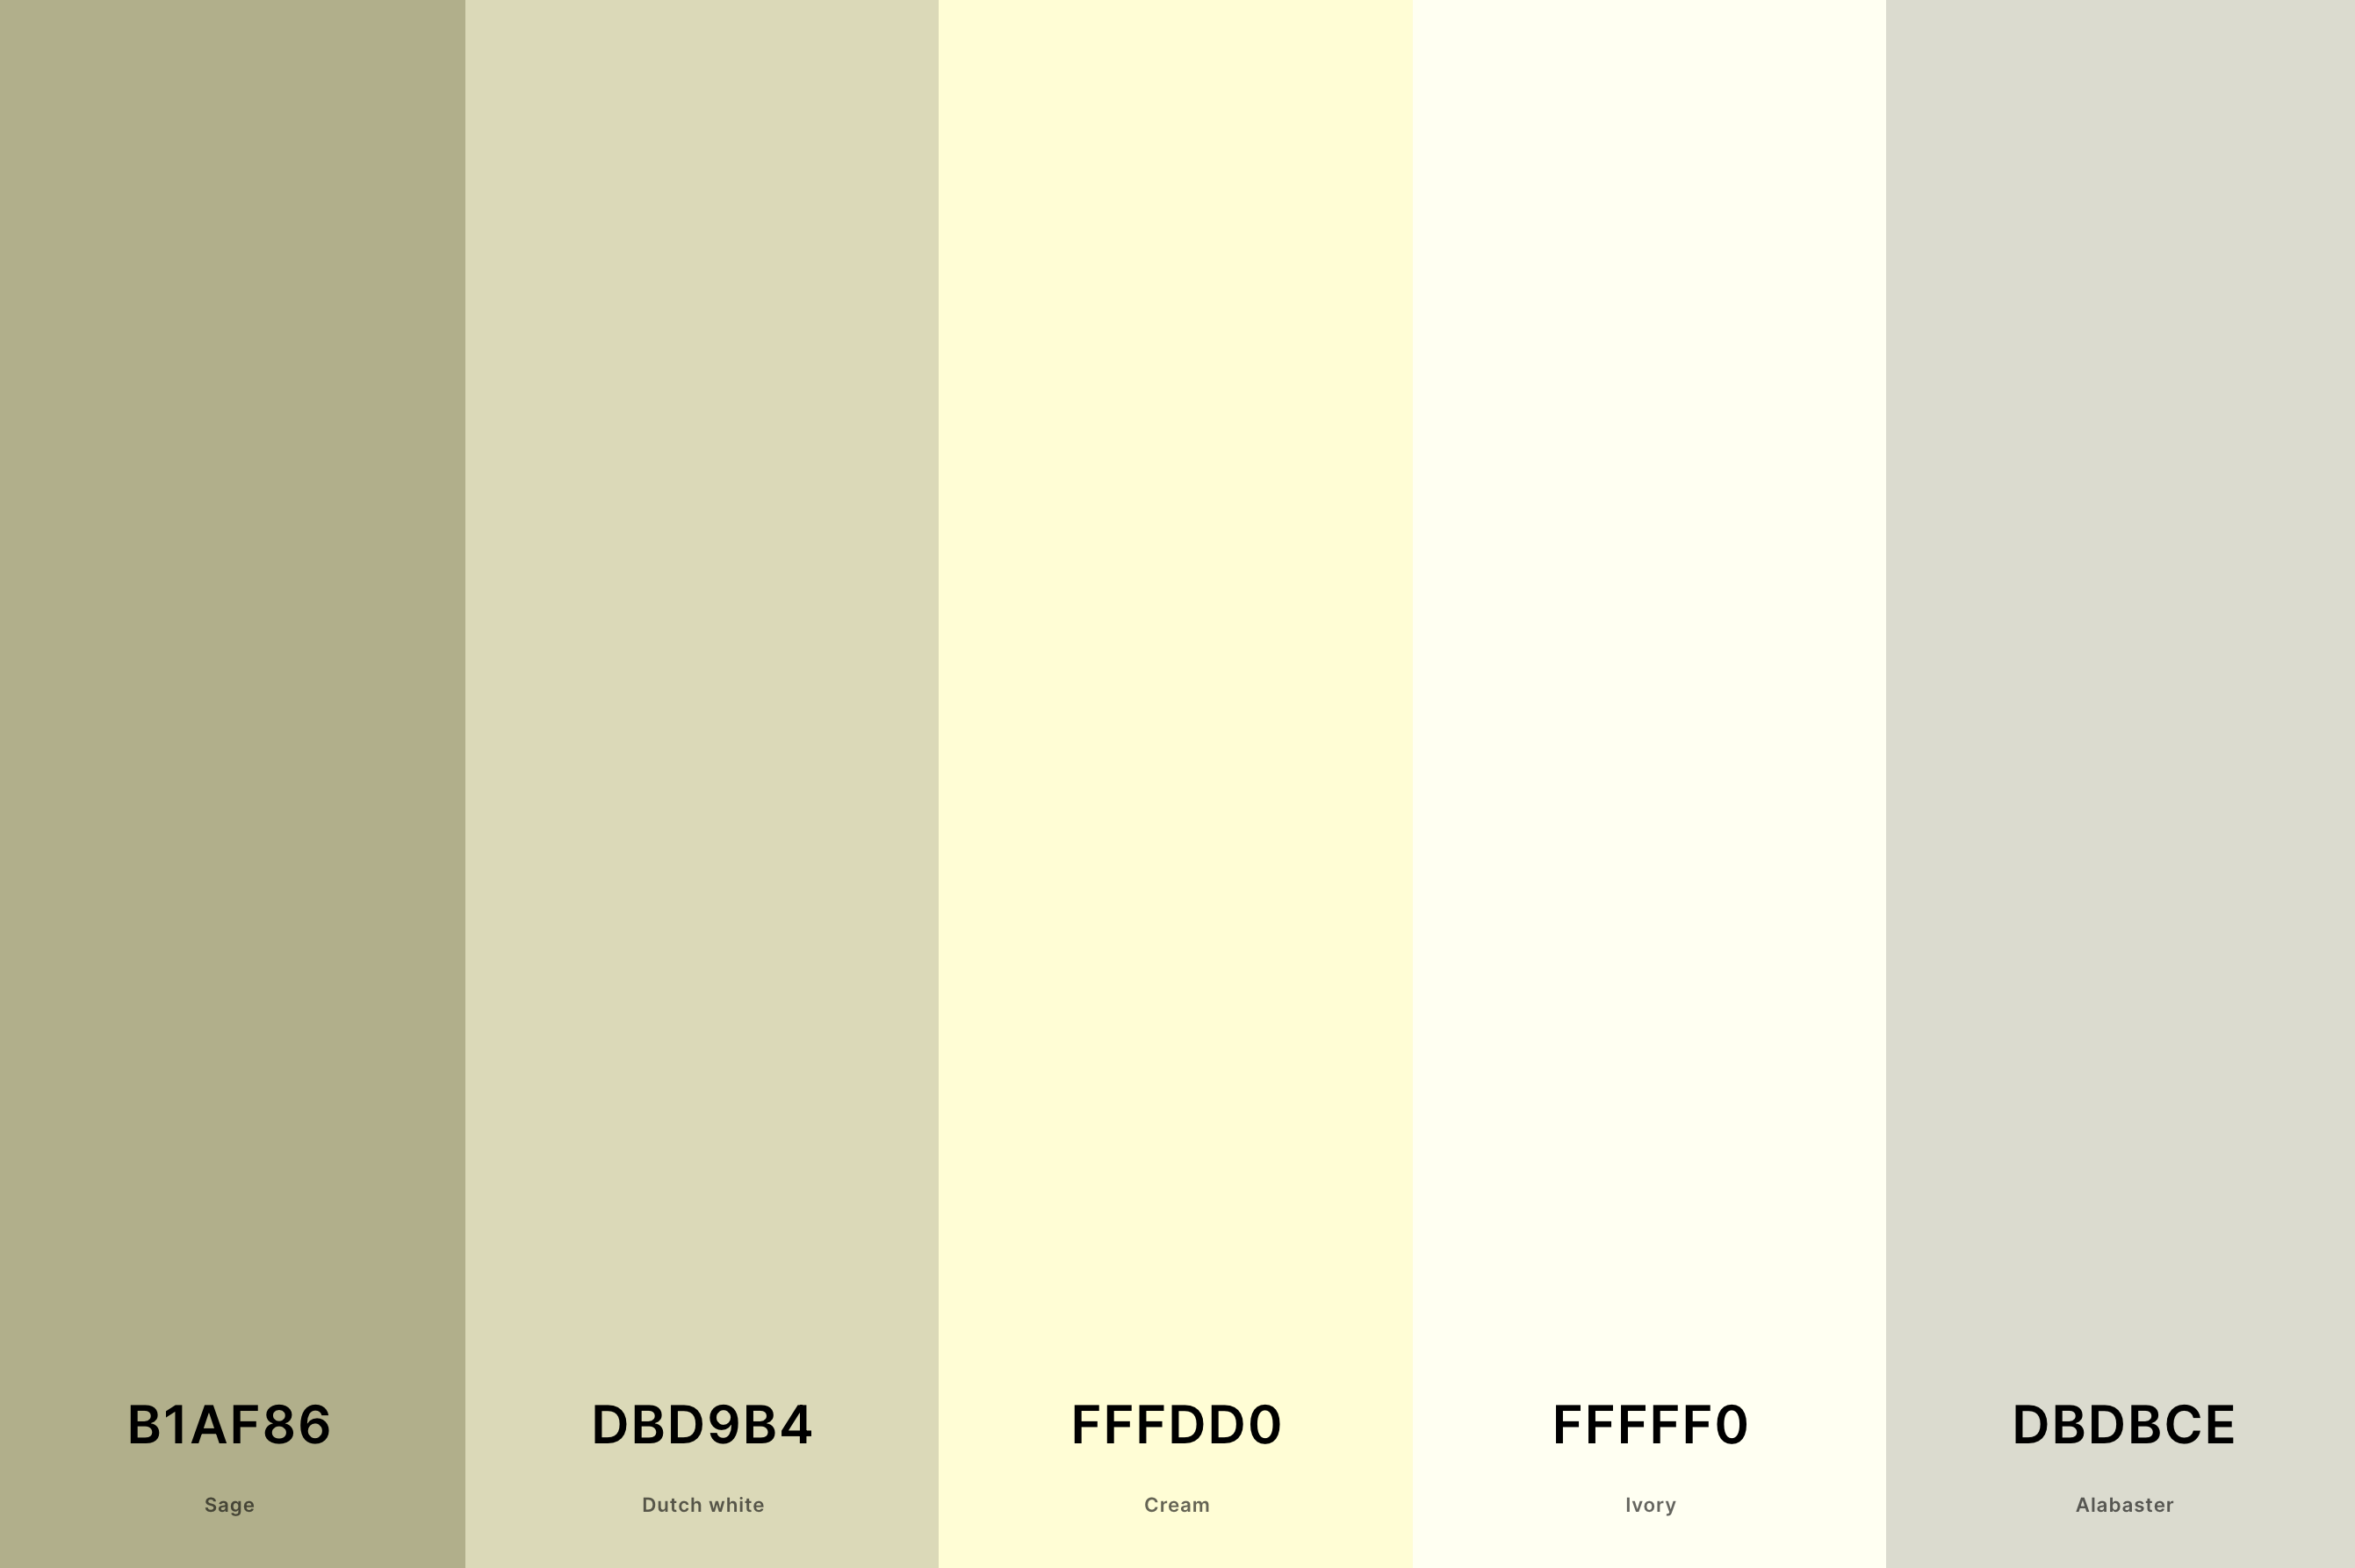 18. Ivory And Cream Color Palette Color Palette with Sage (Hex #B1AF86) + Dutch White (Hex #DBD9B4) + Cream (Hex #FFFDD0) + Ivory (Hex #FFFFF0) + Alabaster (Hex #DBDBCE) Color Palette with Hex Codes